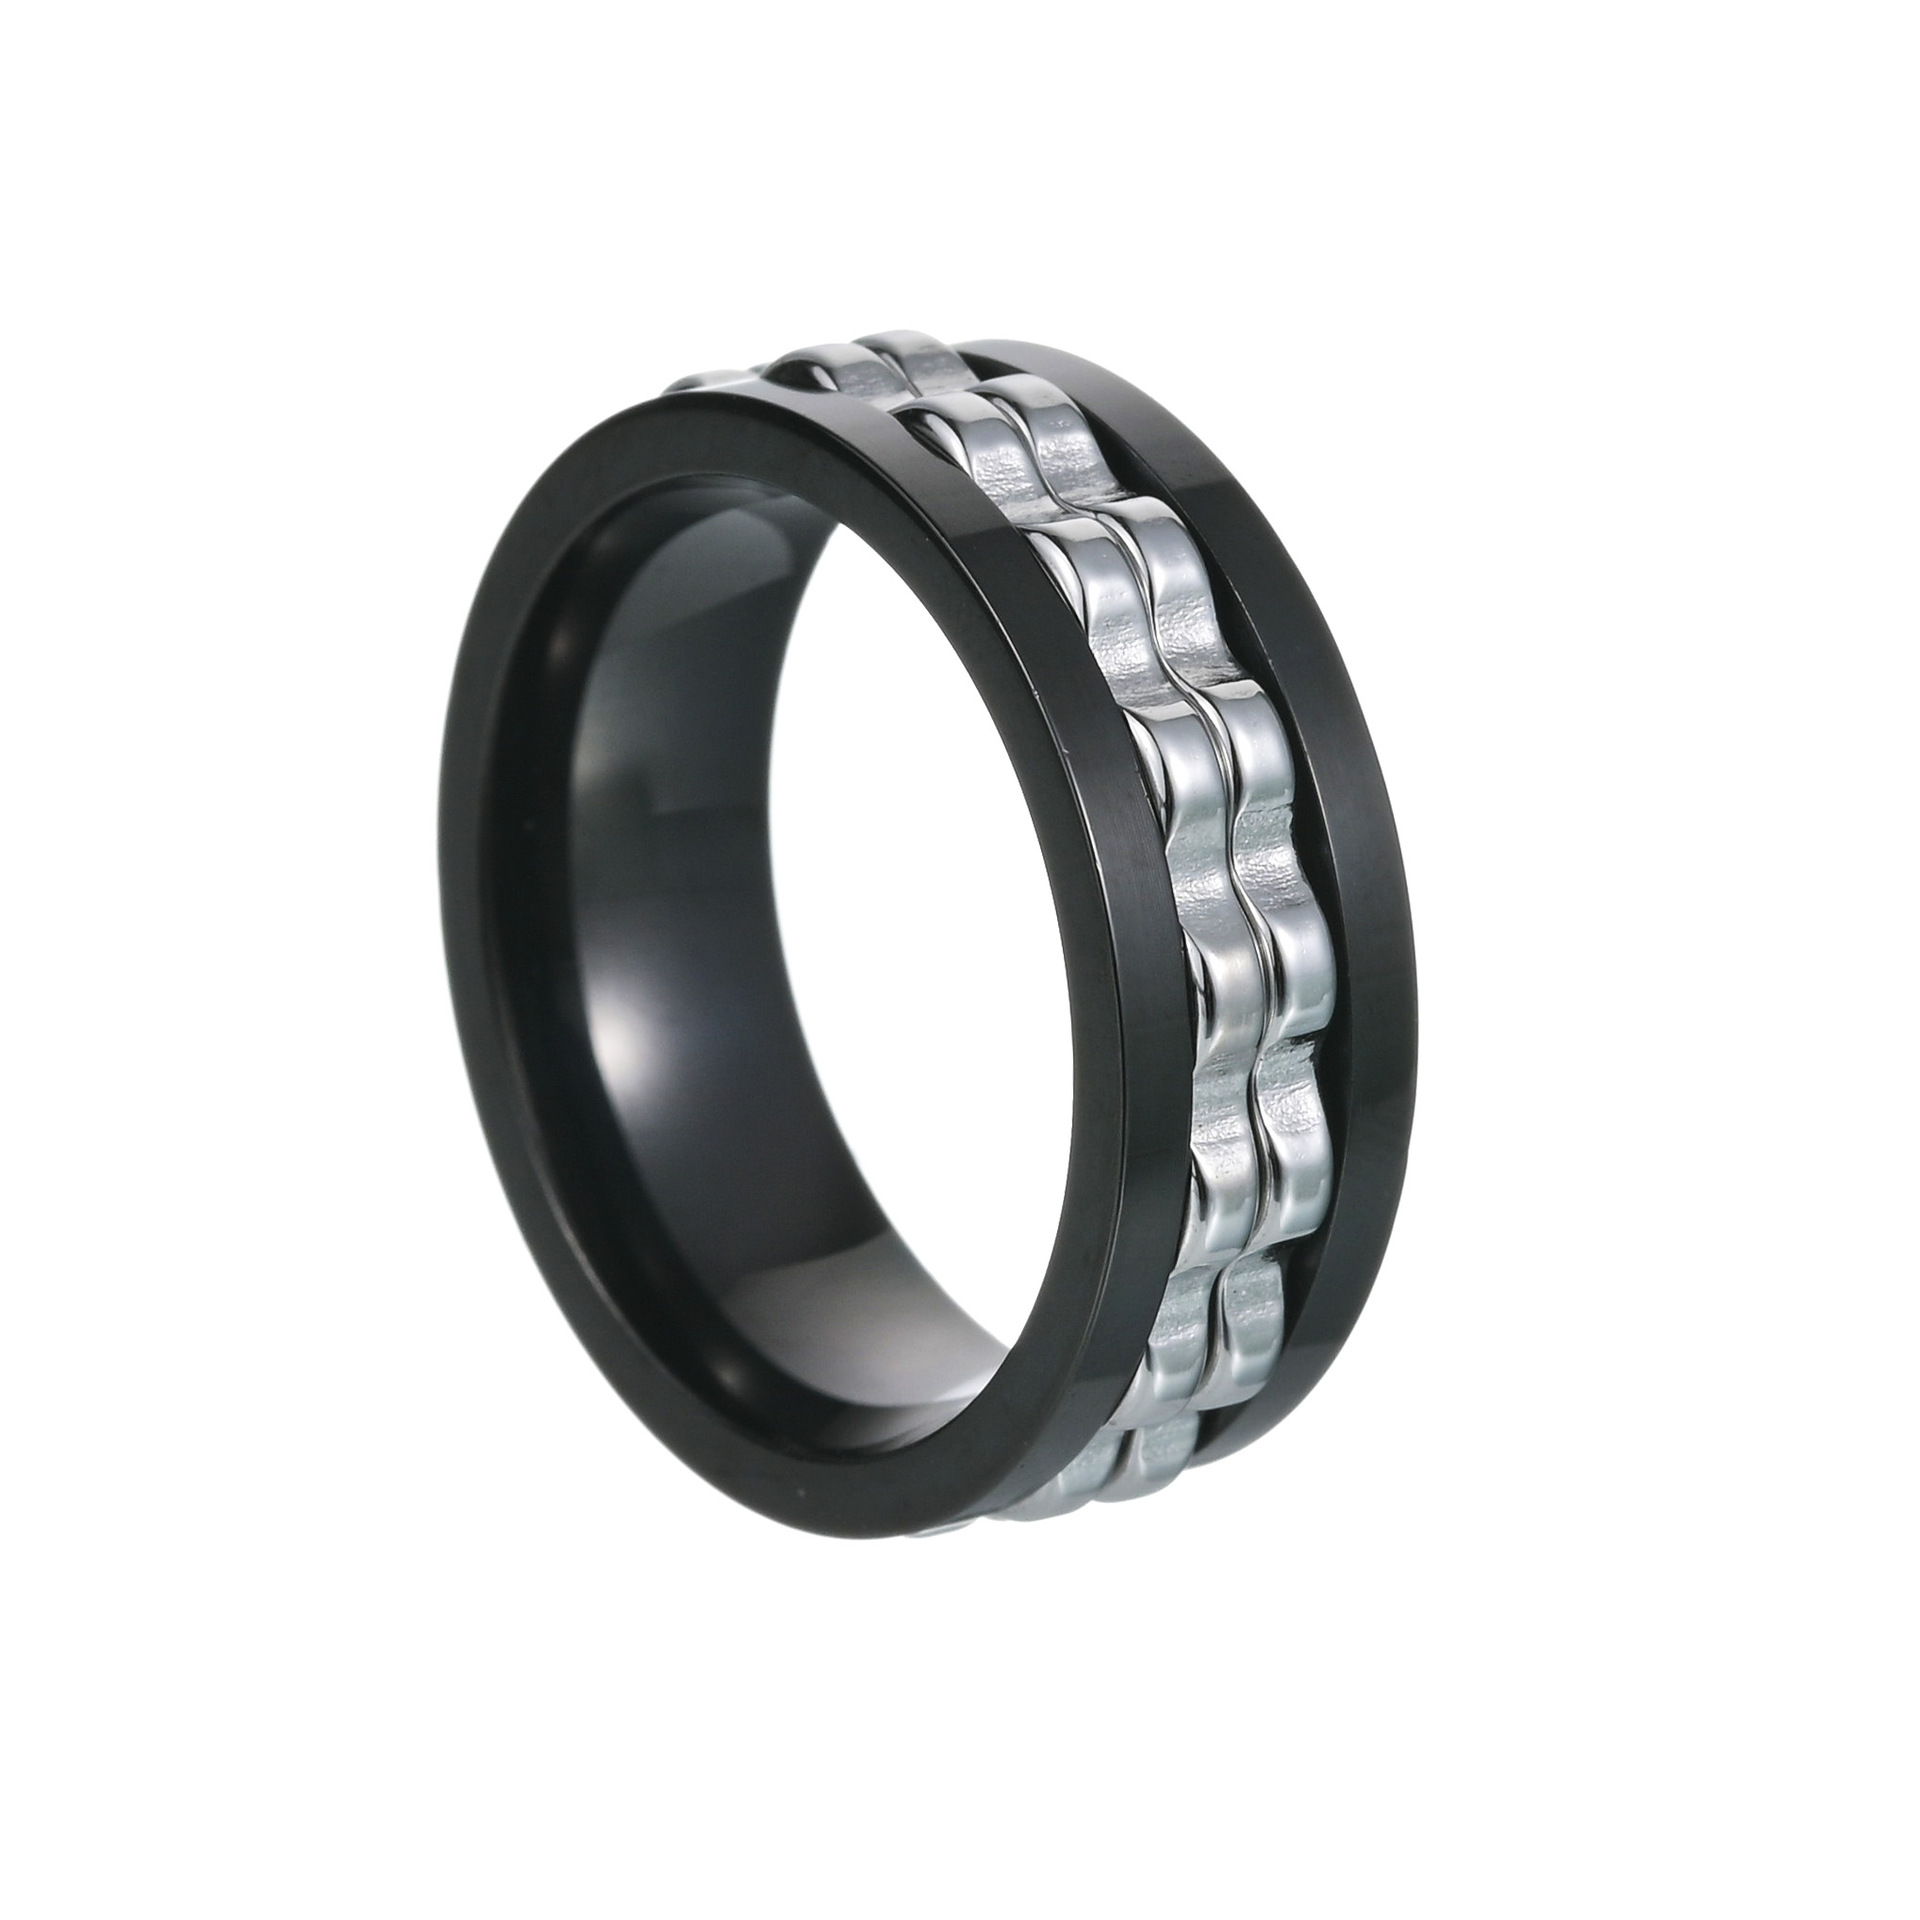 5:Black Ring   Silver Gear